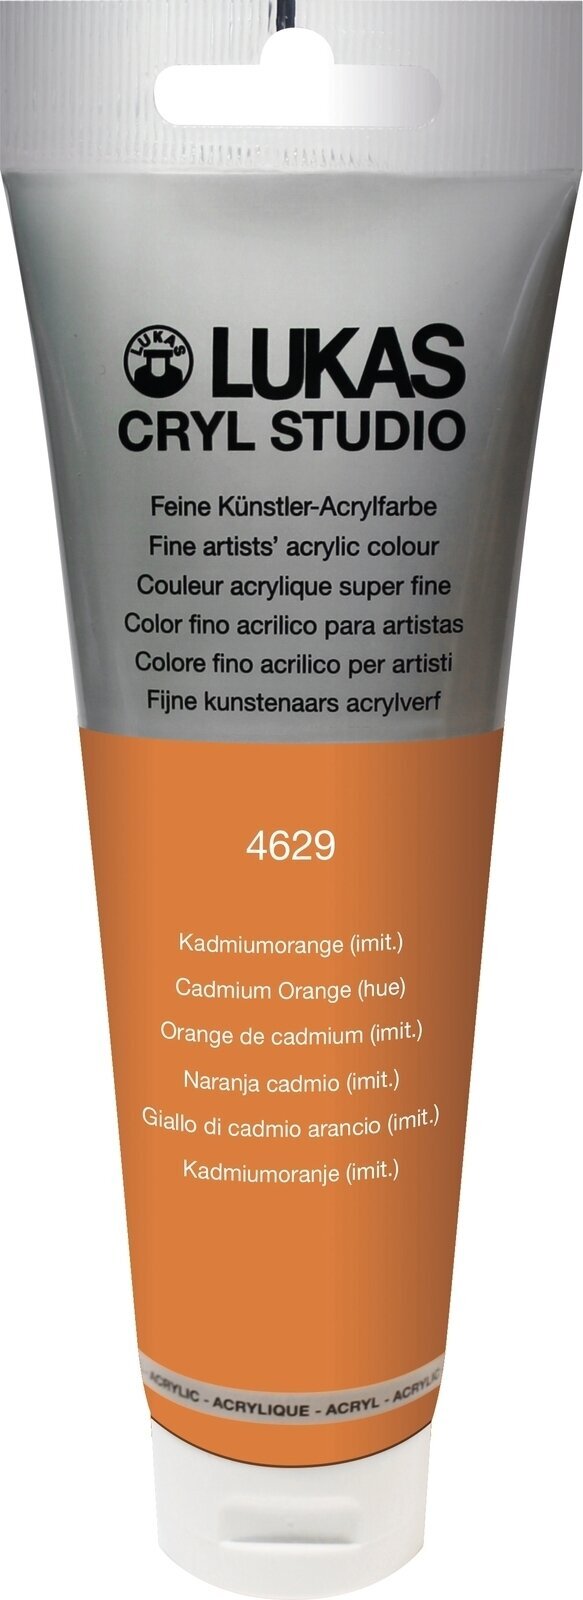 Peinture acrylique Lukas Cryl Studio Acrylic Paint Plastic Tube Peinture acrylique Cadmium Orange Hue 125 ml 1 pc